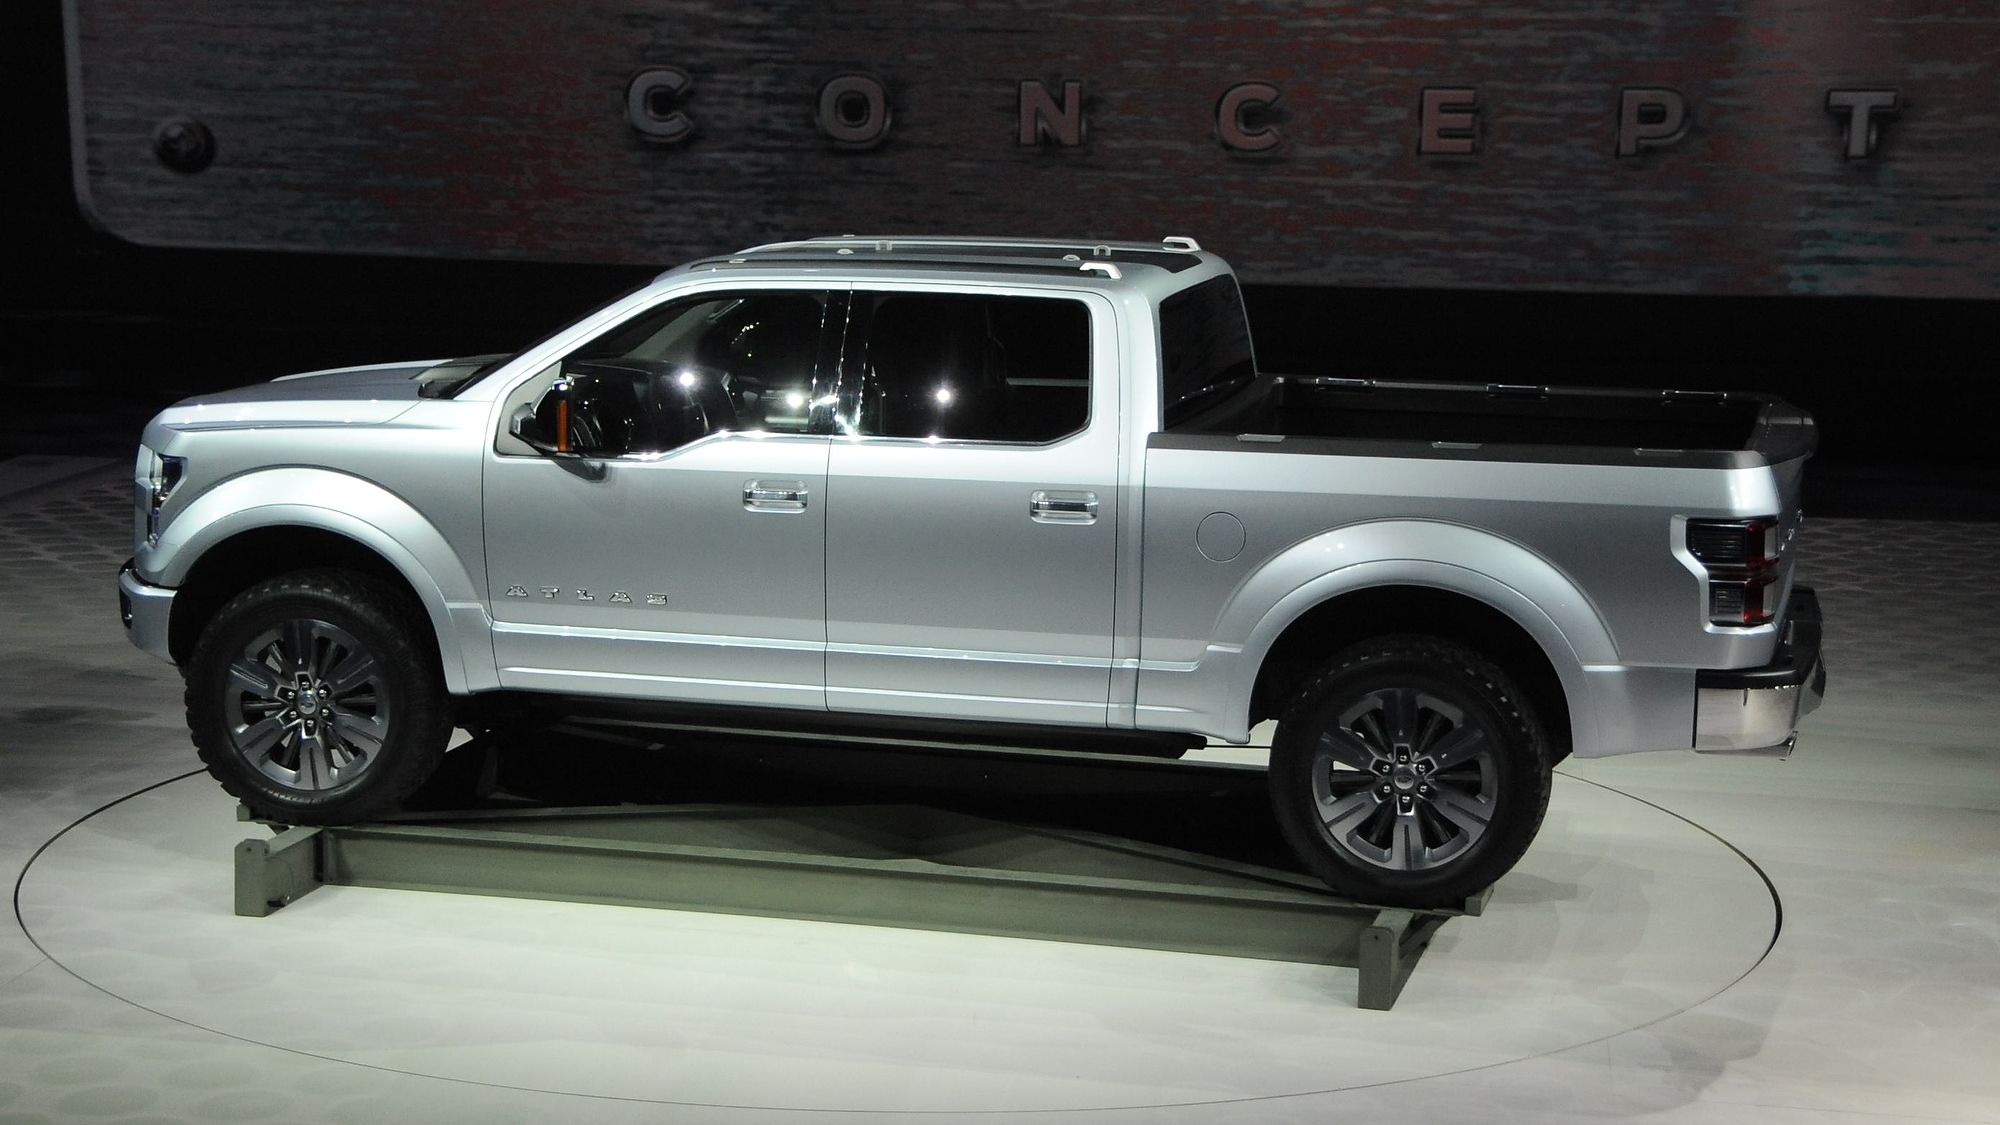 Ford Atlas Concept revealed at 2013 Detroit Auto Show